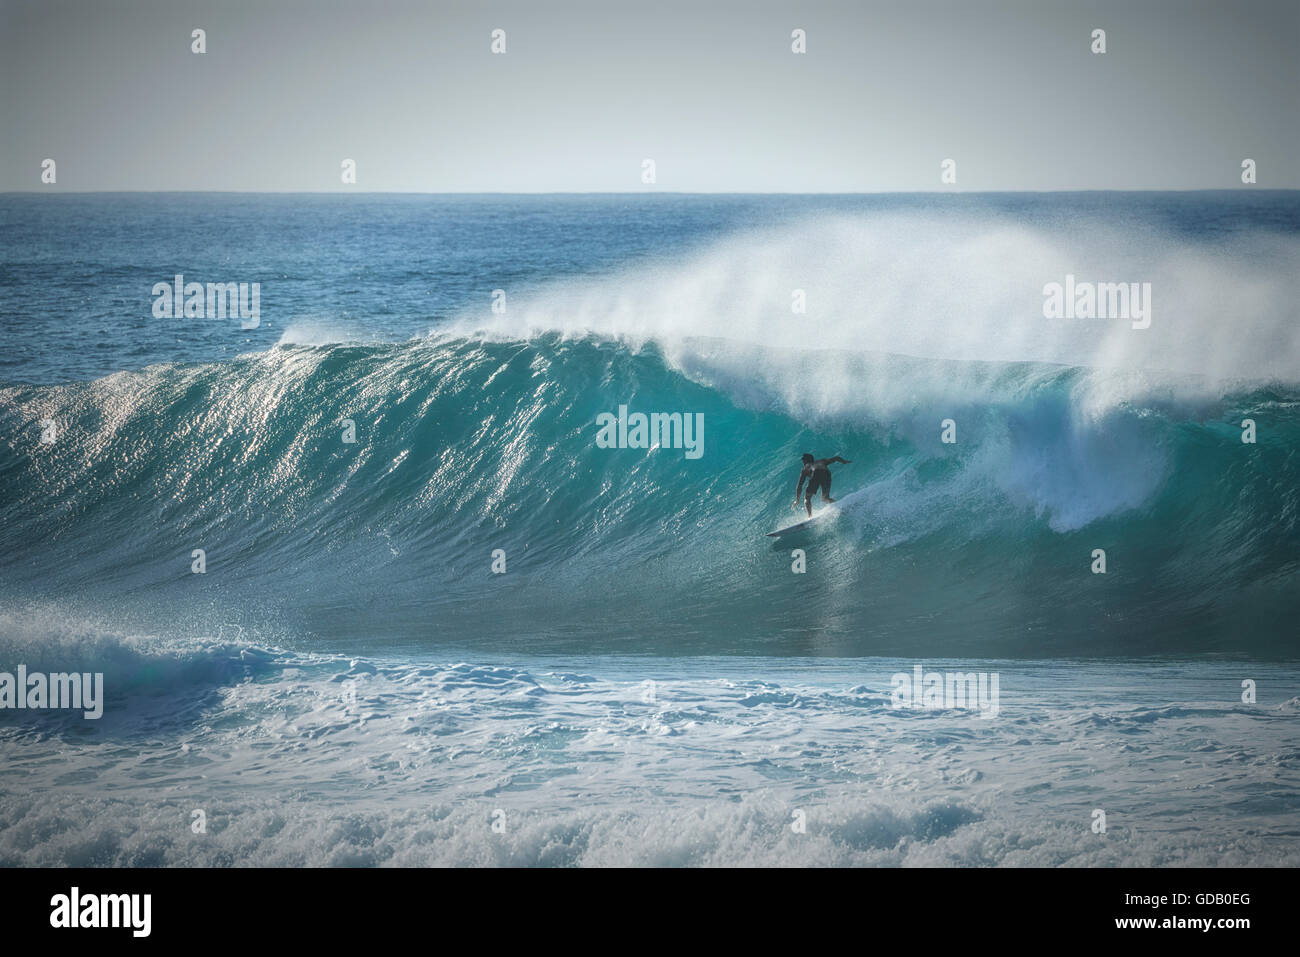 USA,Hawaii,Oahu,North Shore,Haleiwa,Surfing Stock Photo